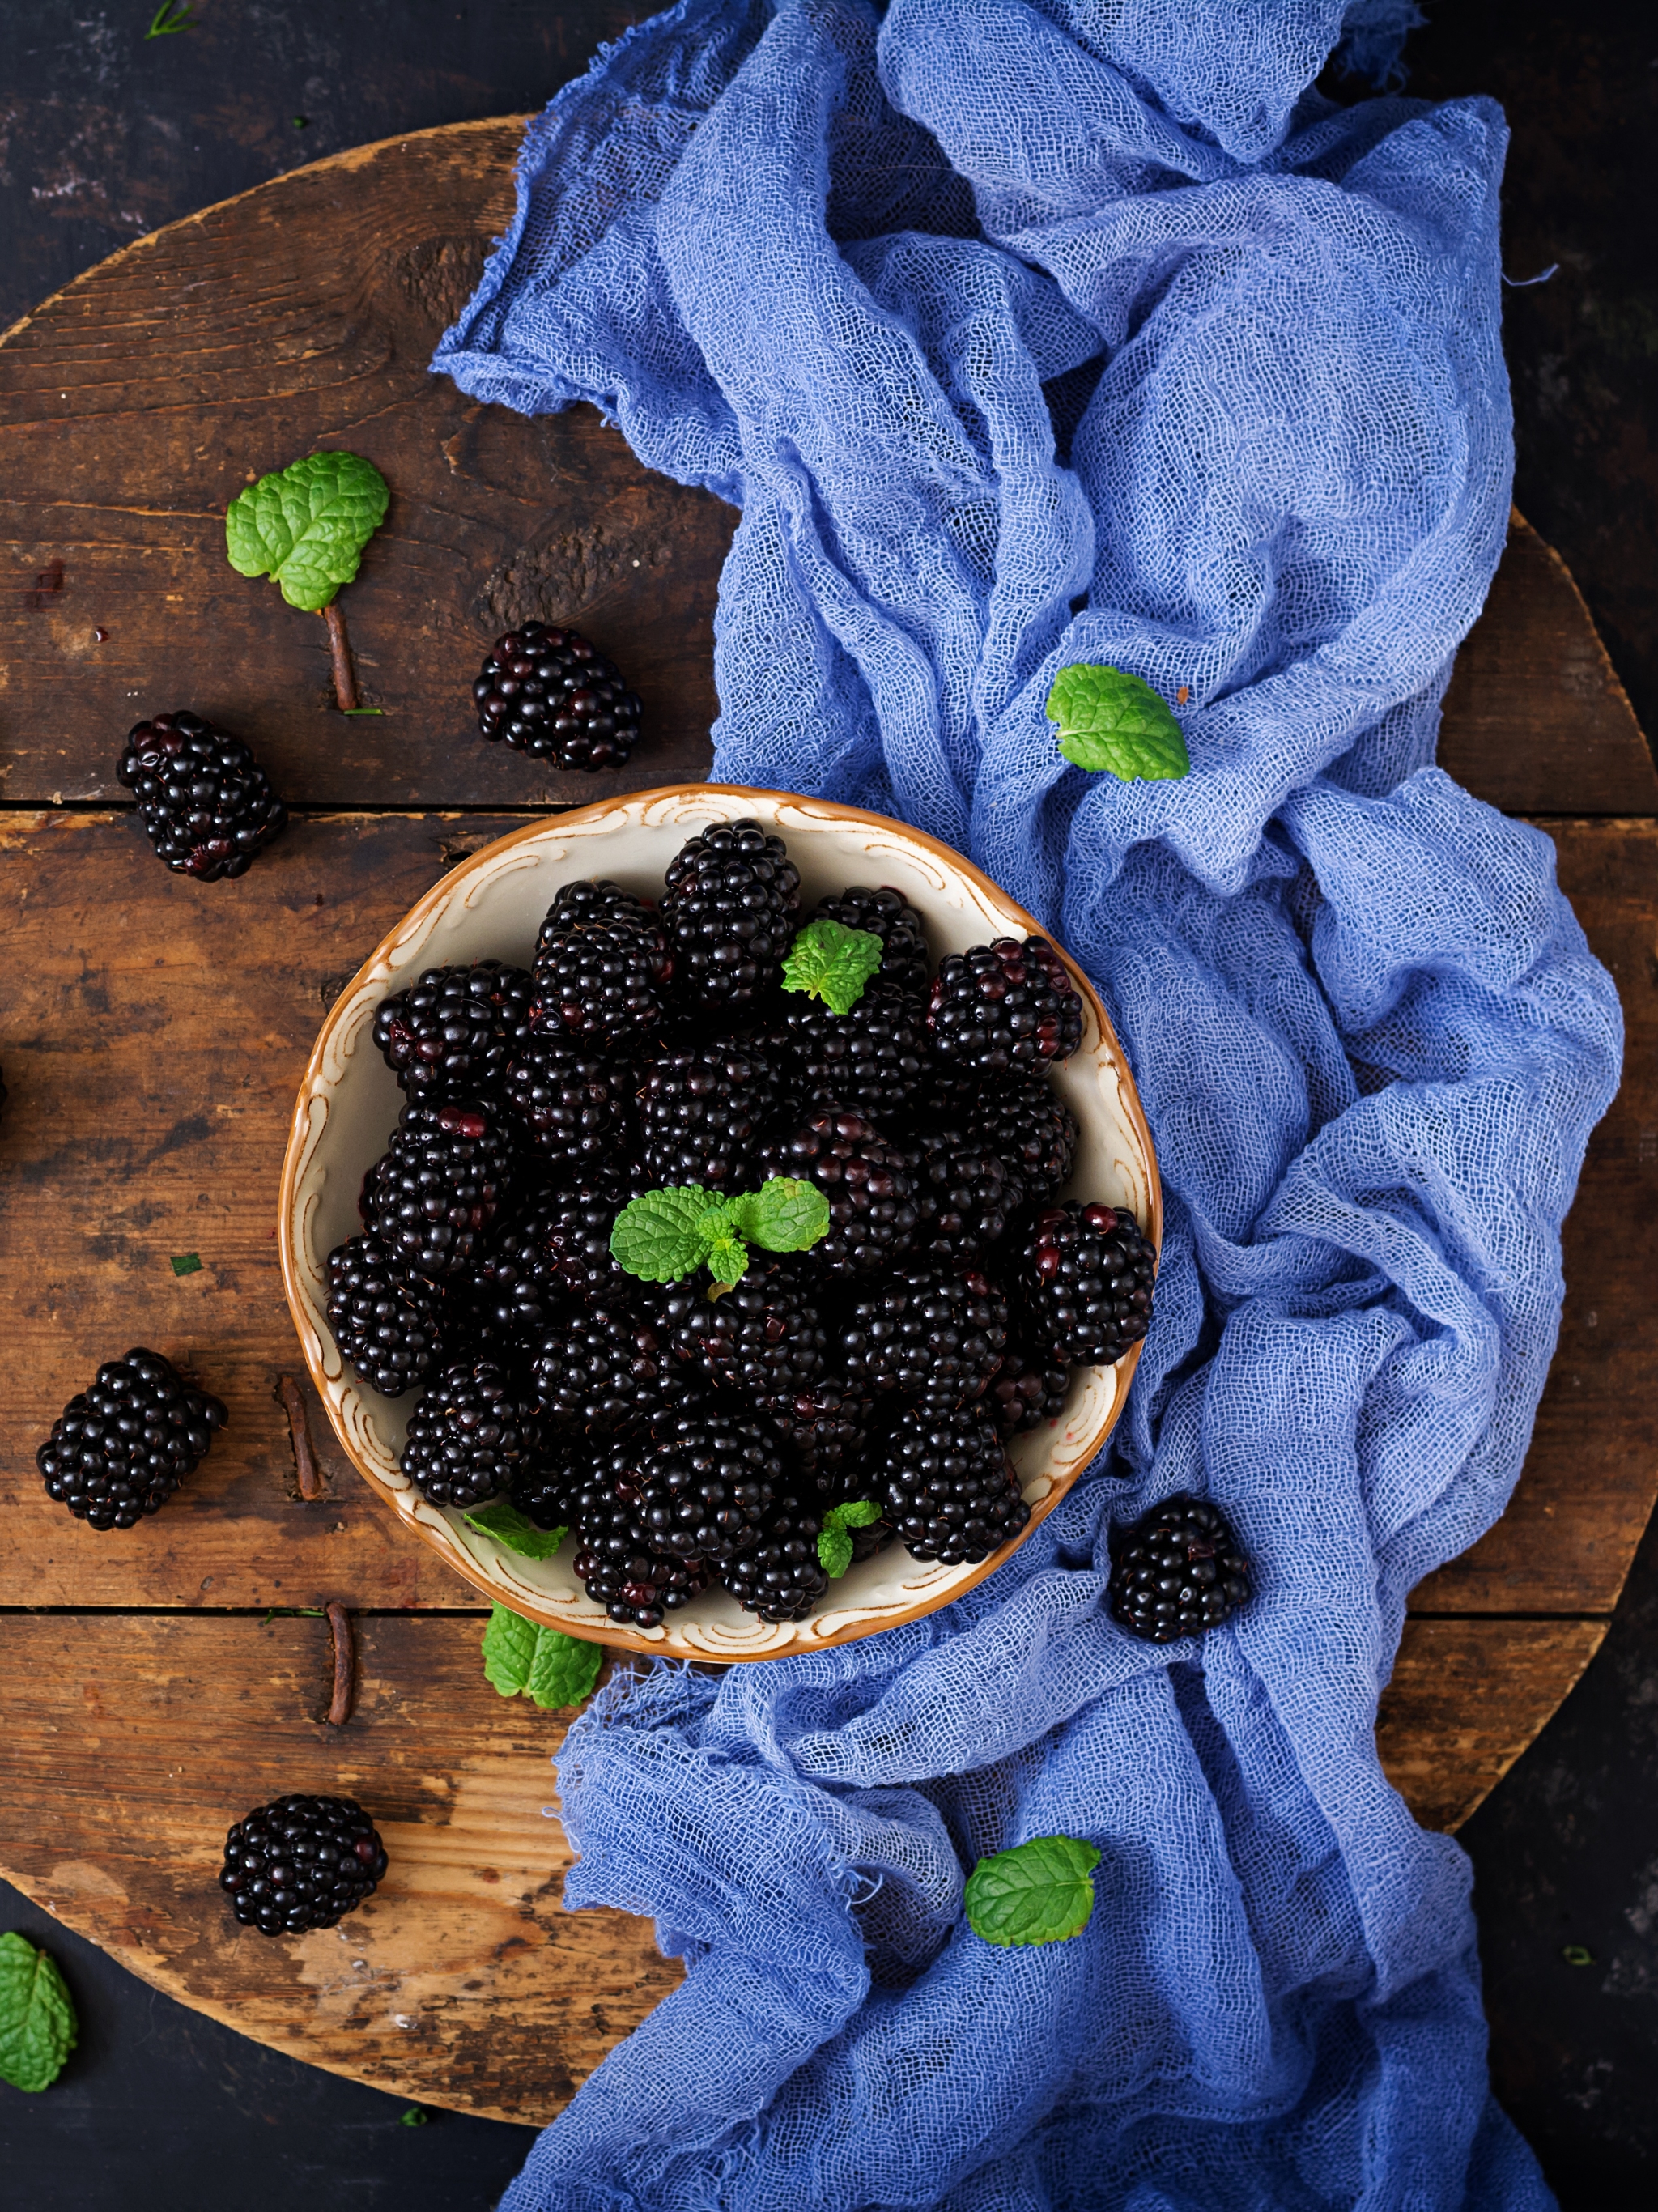 blackberries fruit wallpaper